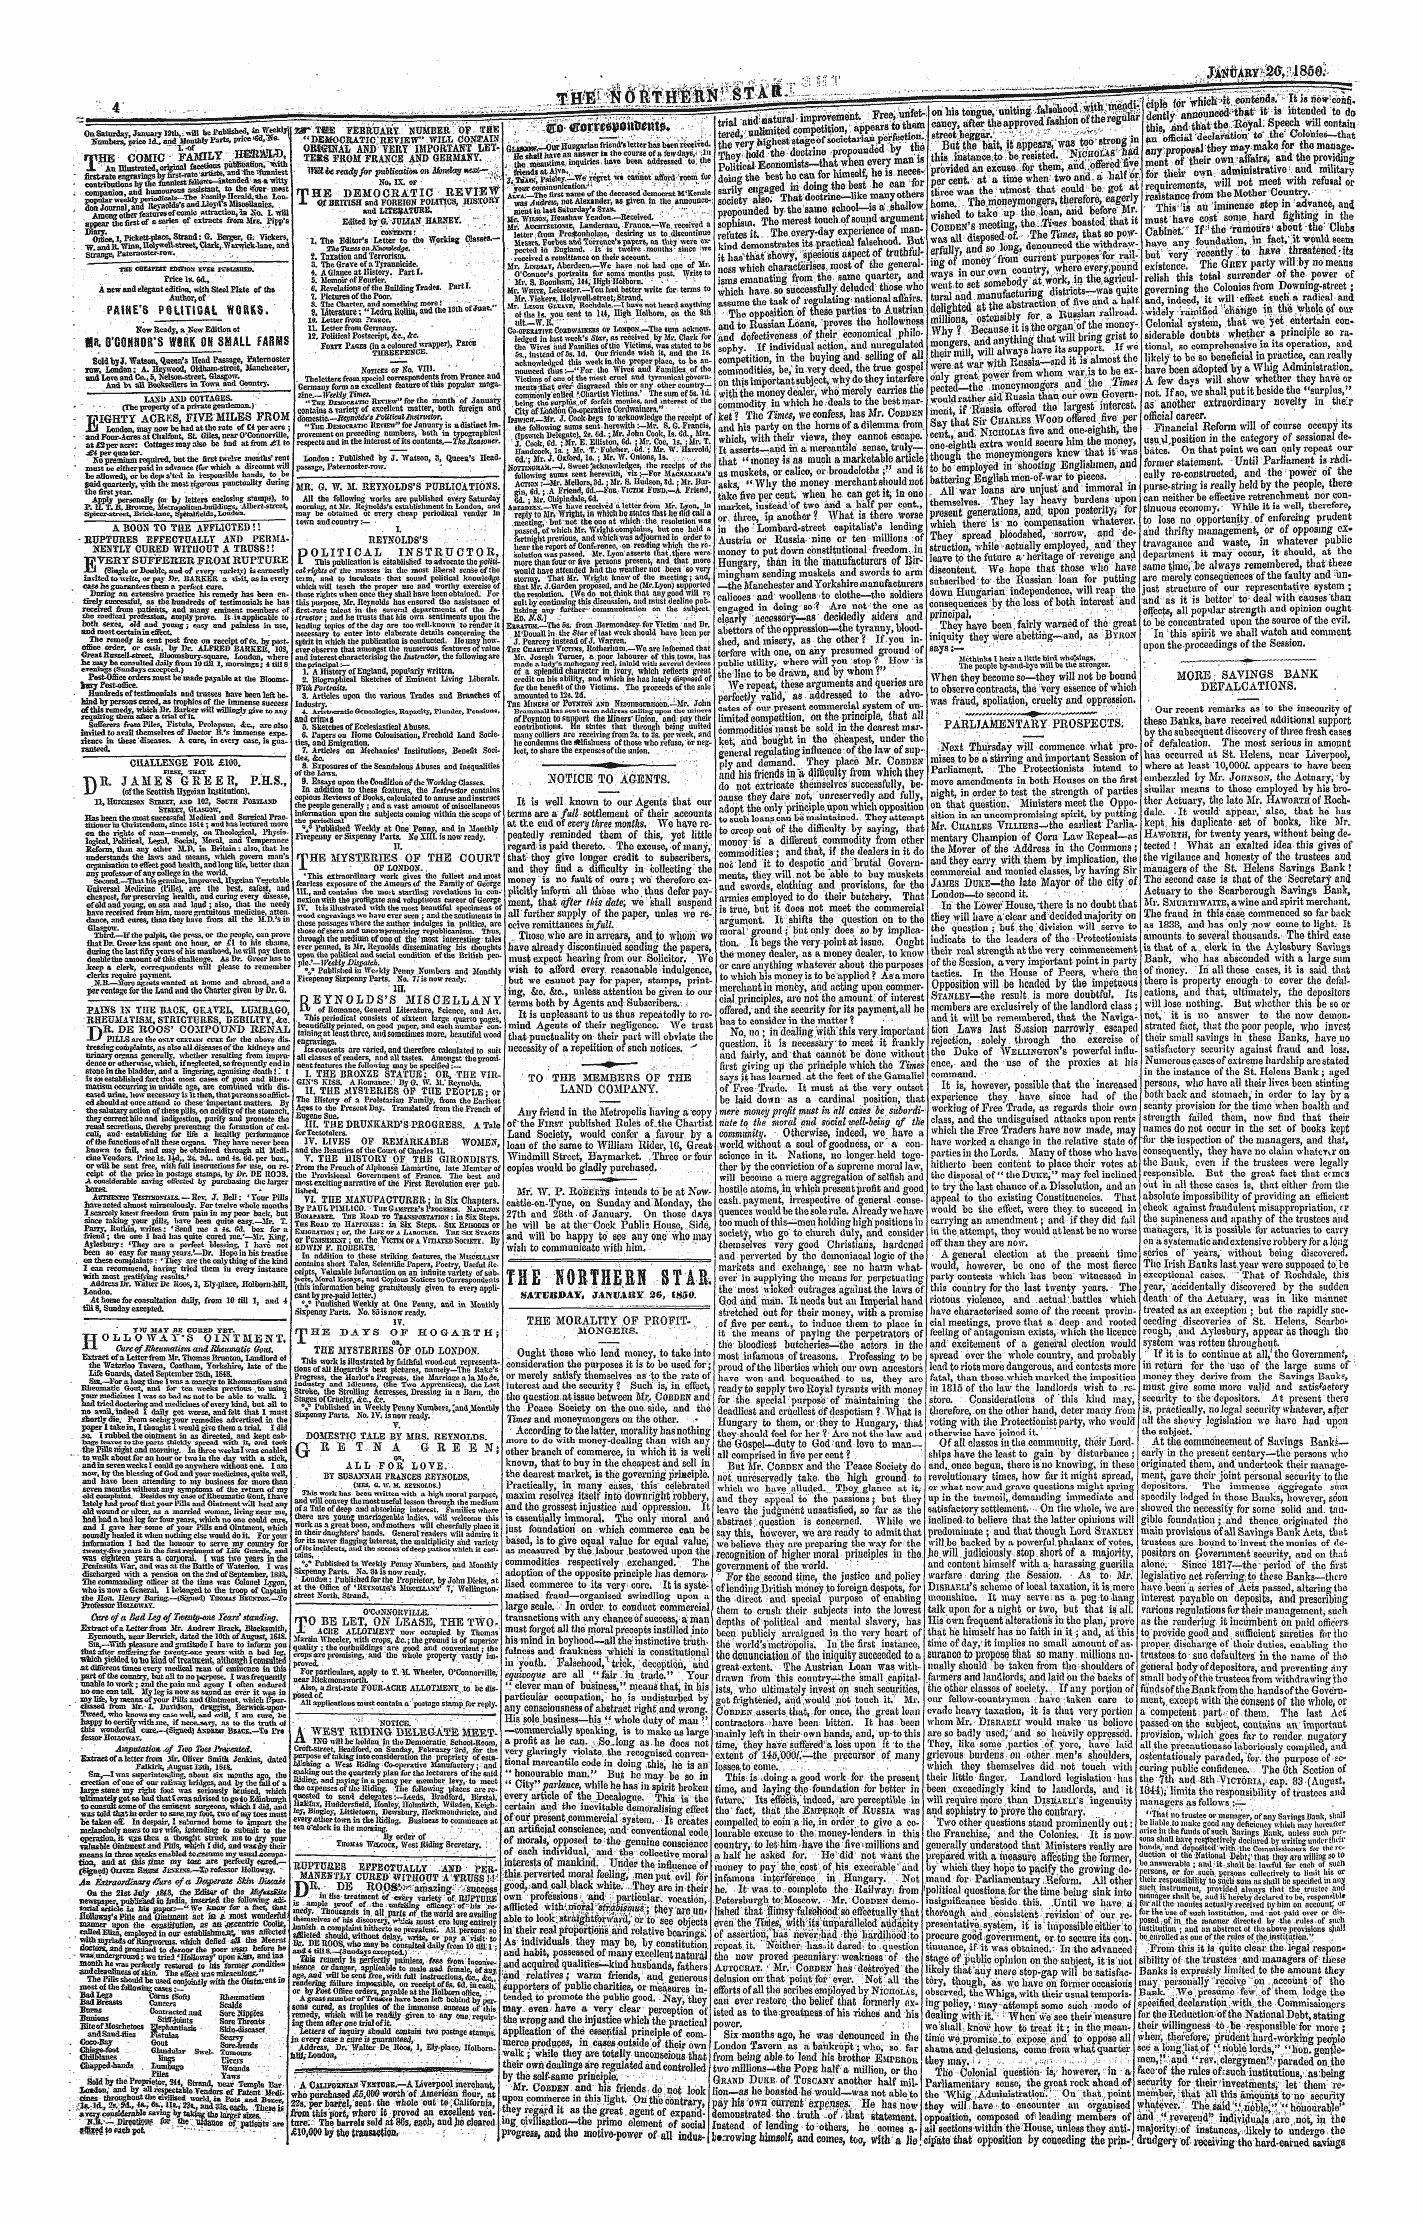 Northern Star (1837-1852): jS F Y, 1st edition - The Northern Stasv Satl'kday, January 26, 1850.